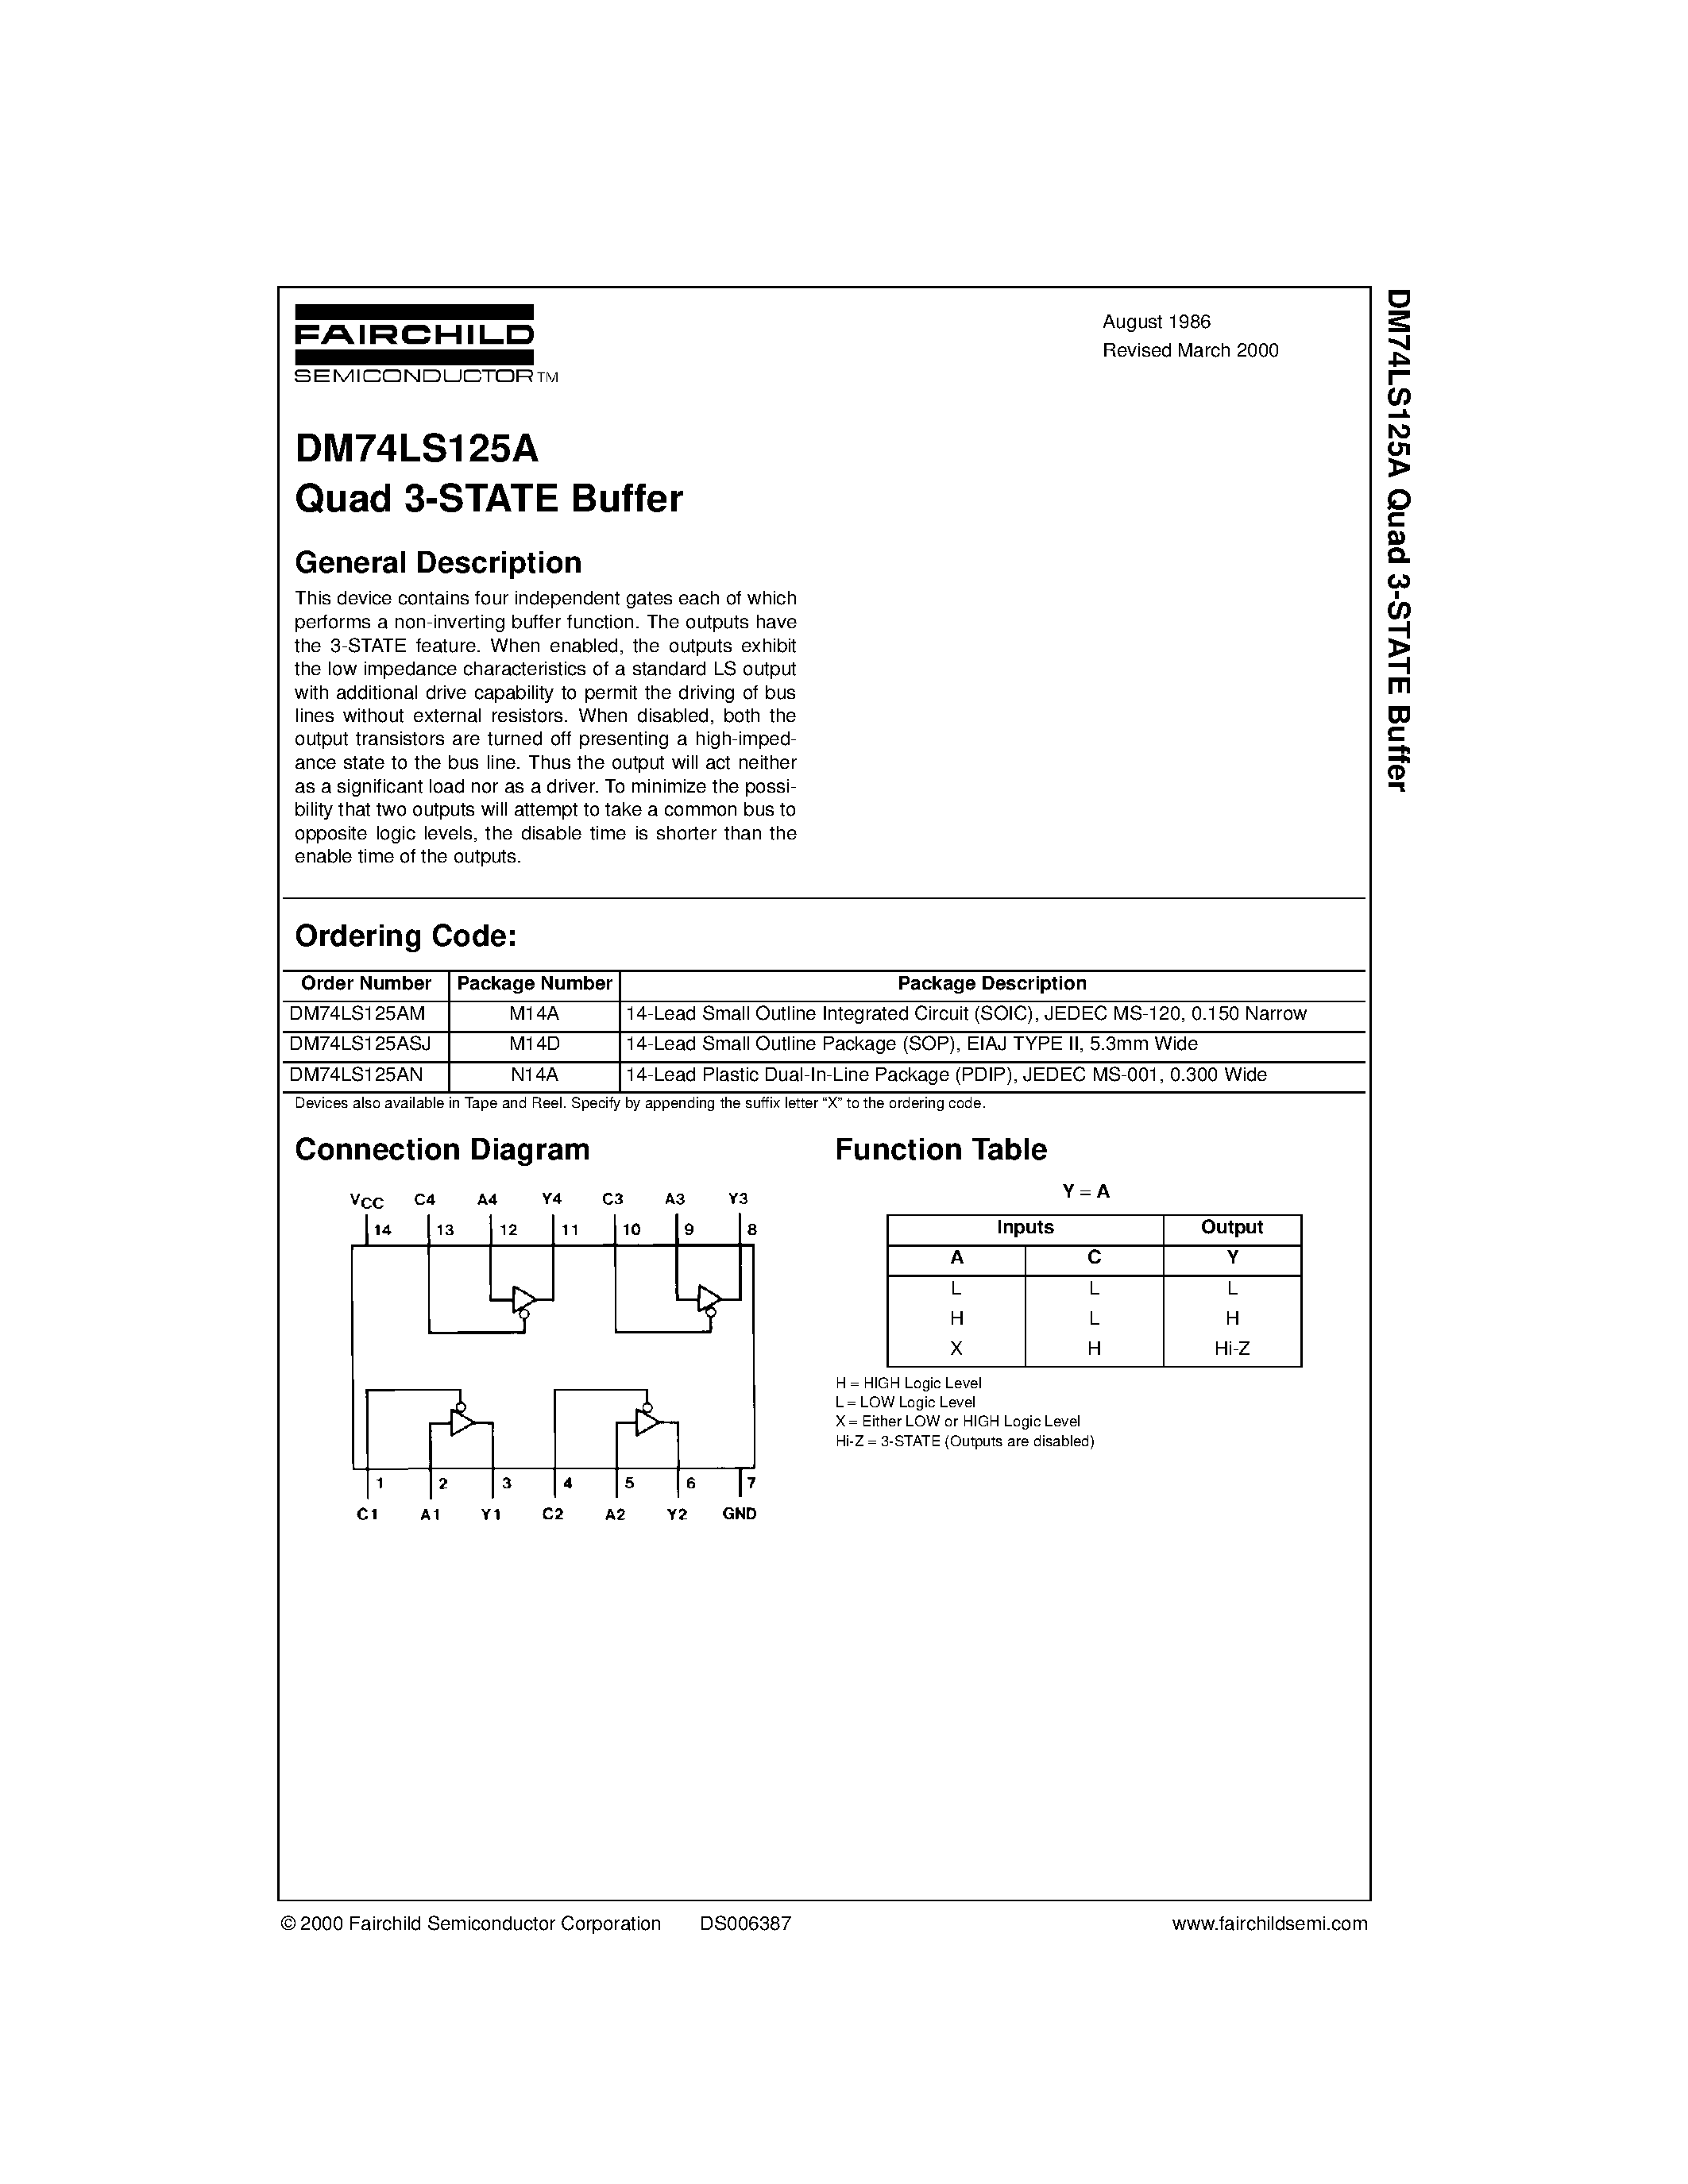 Datasheet 74125 - Quad 3-STATE Buffer page 1